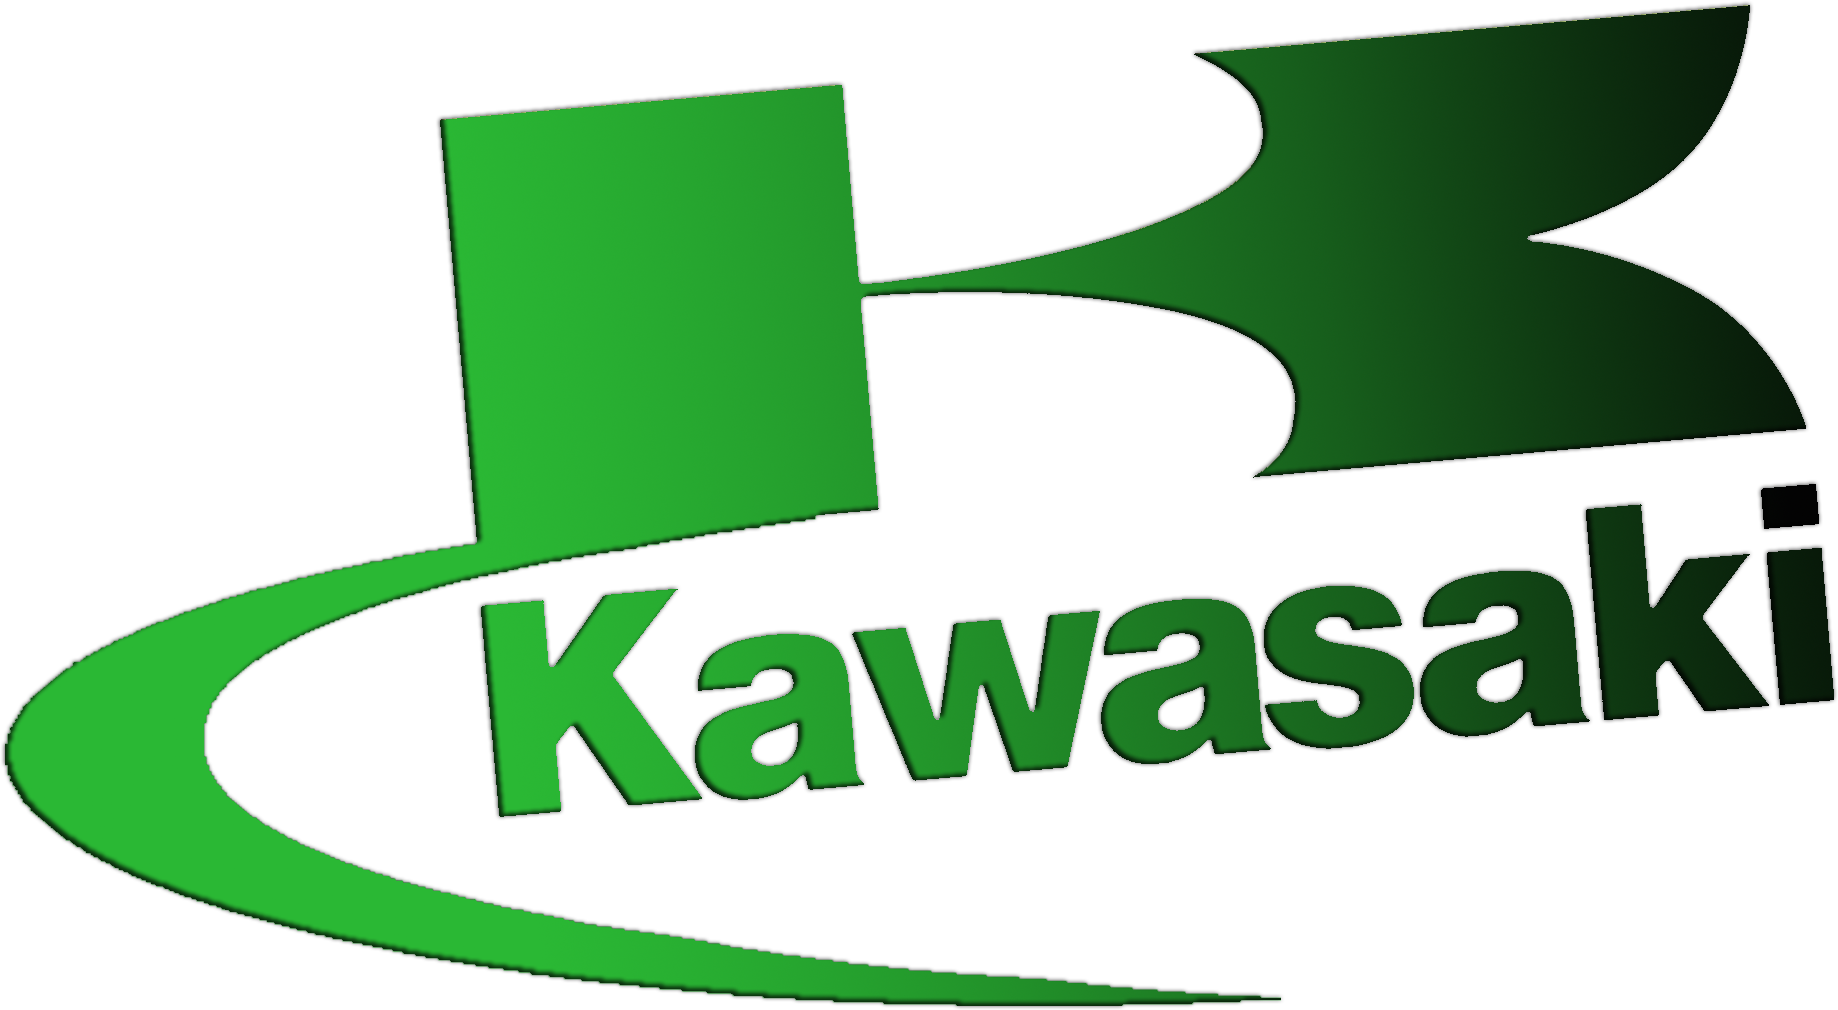 Kawasaki logo PNG صورة خلفية